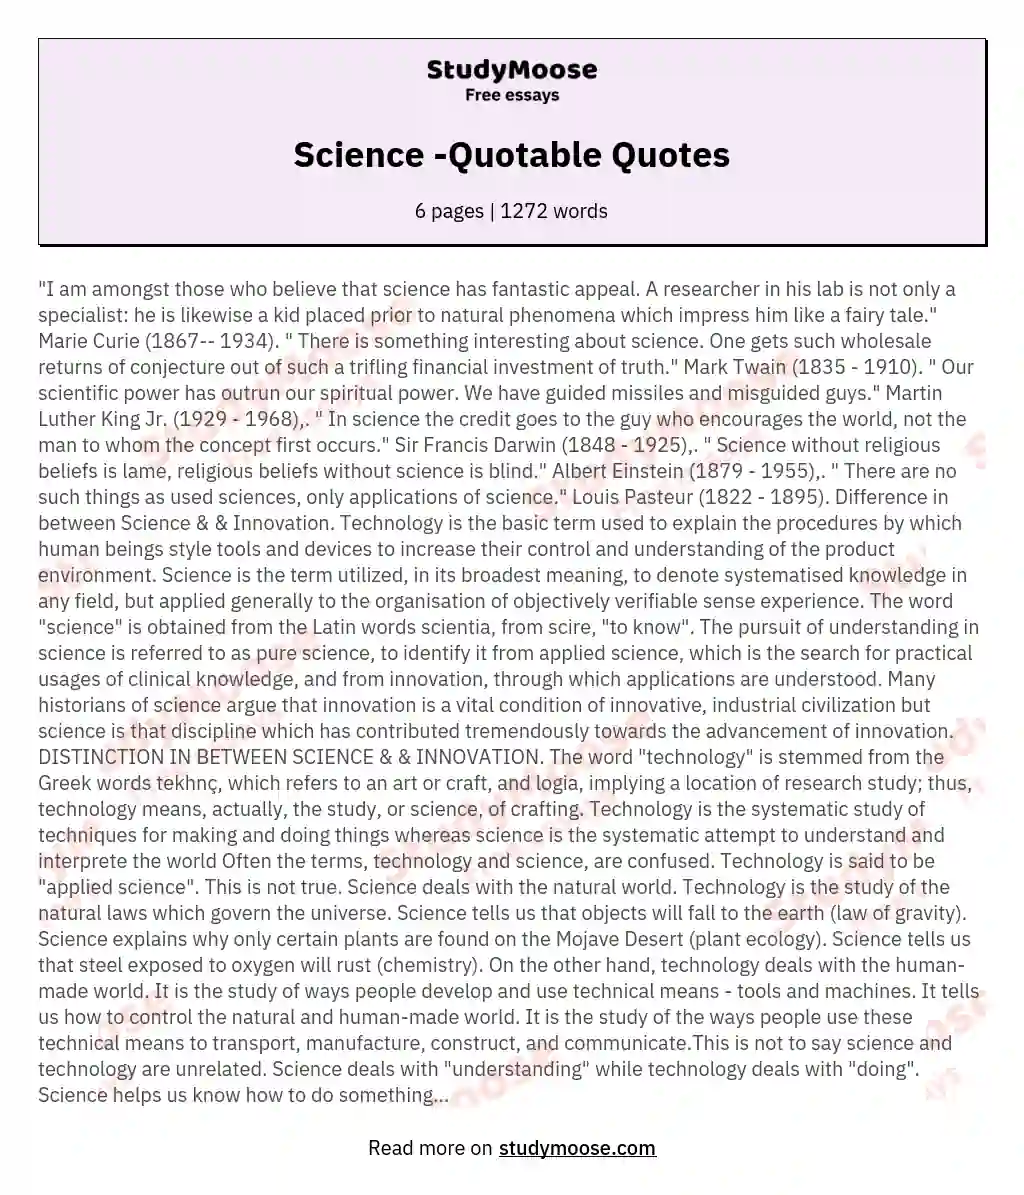 Science -Quotable Quotes essay